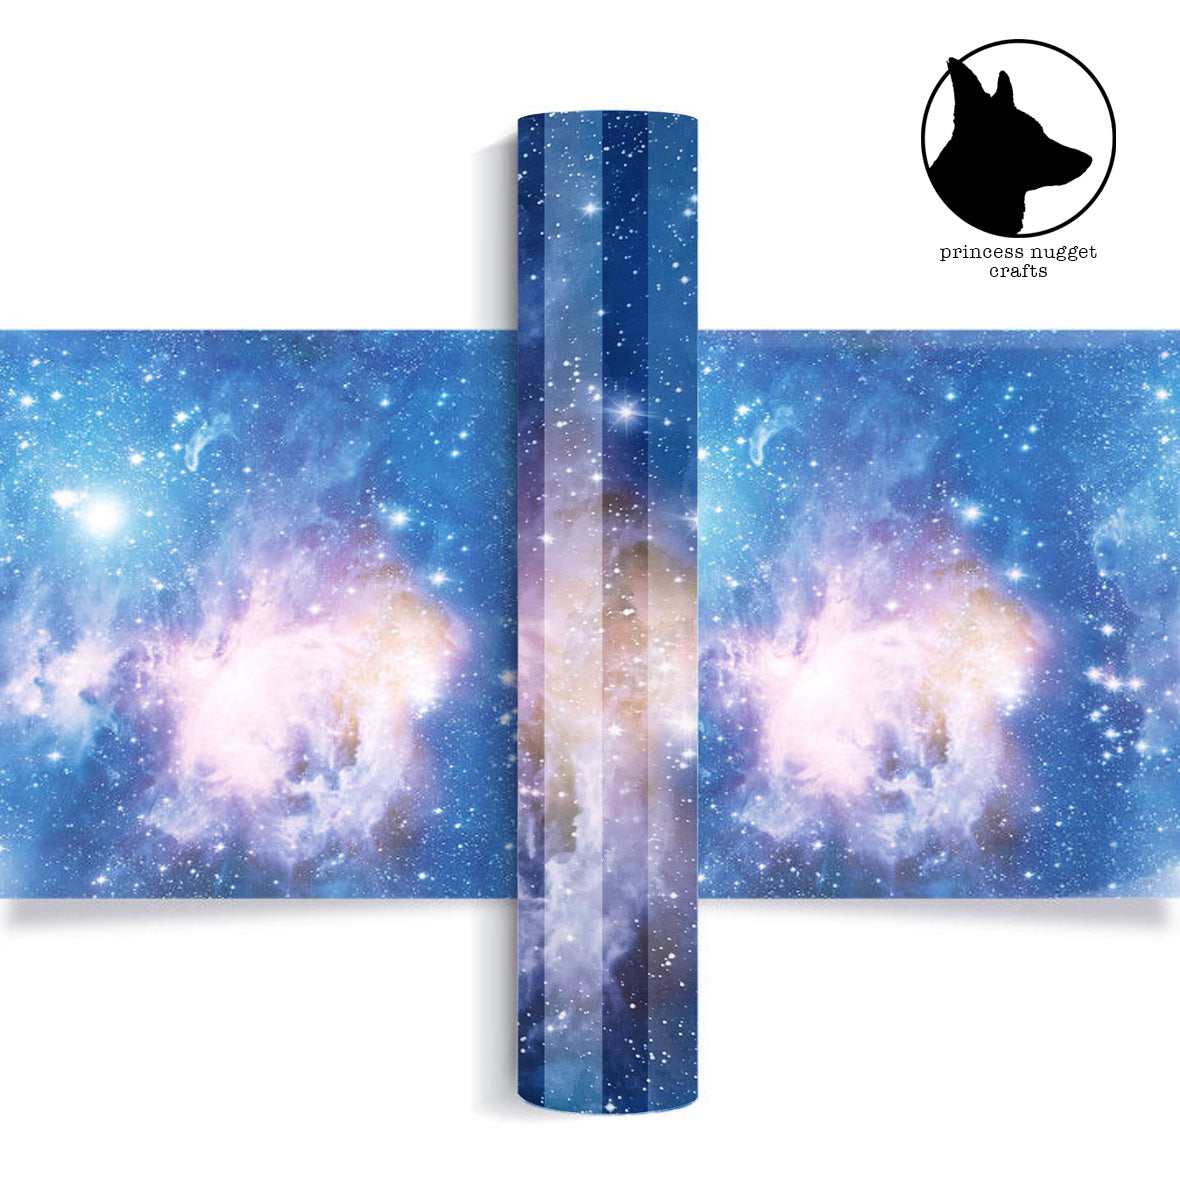 FLEX Galaxy Starry Bright Sky - Princess Nugget crafts